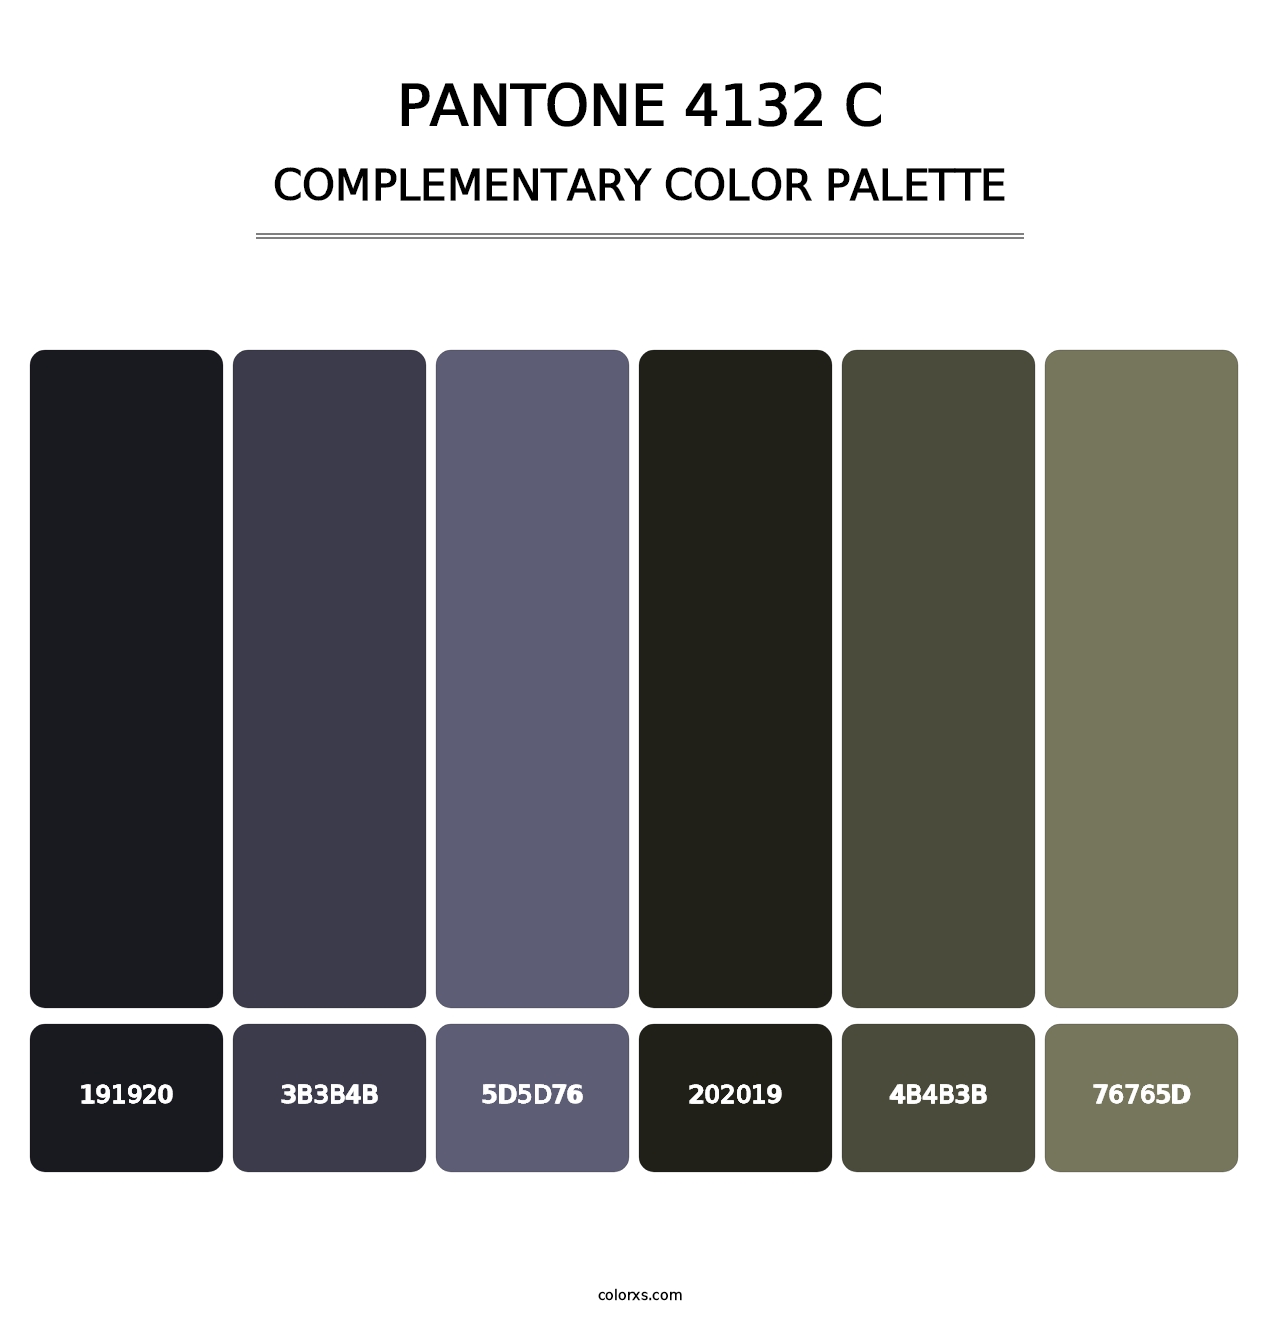 PANTONE 4132 C - Complementary Color Palette